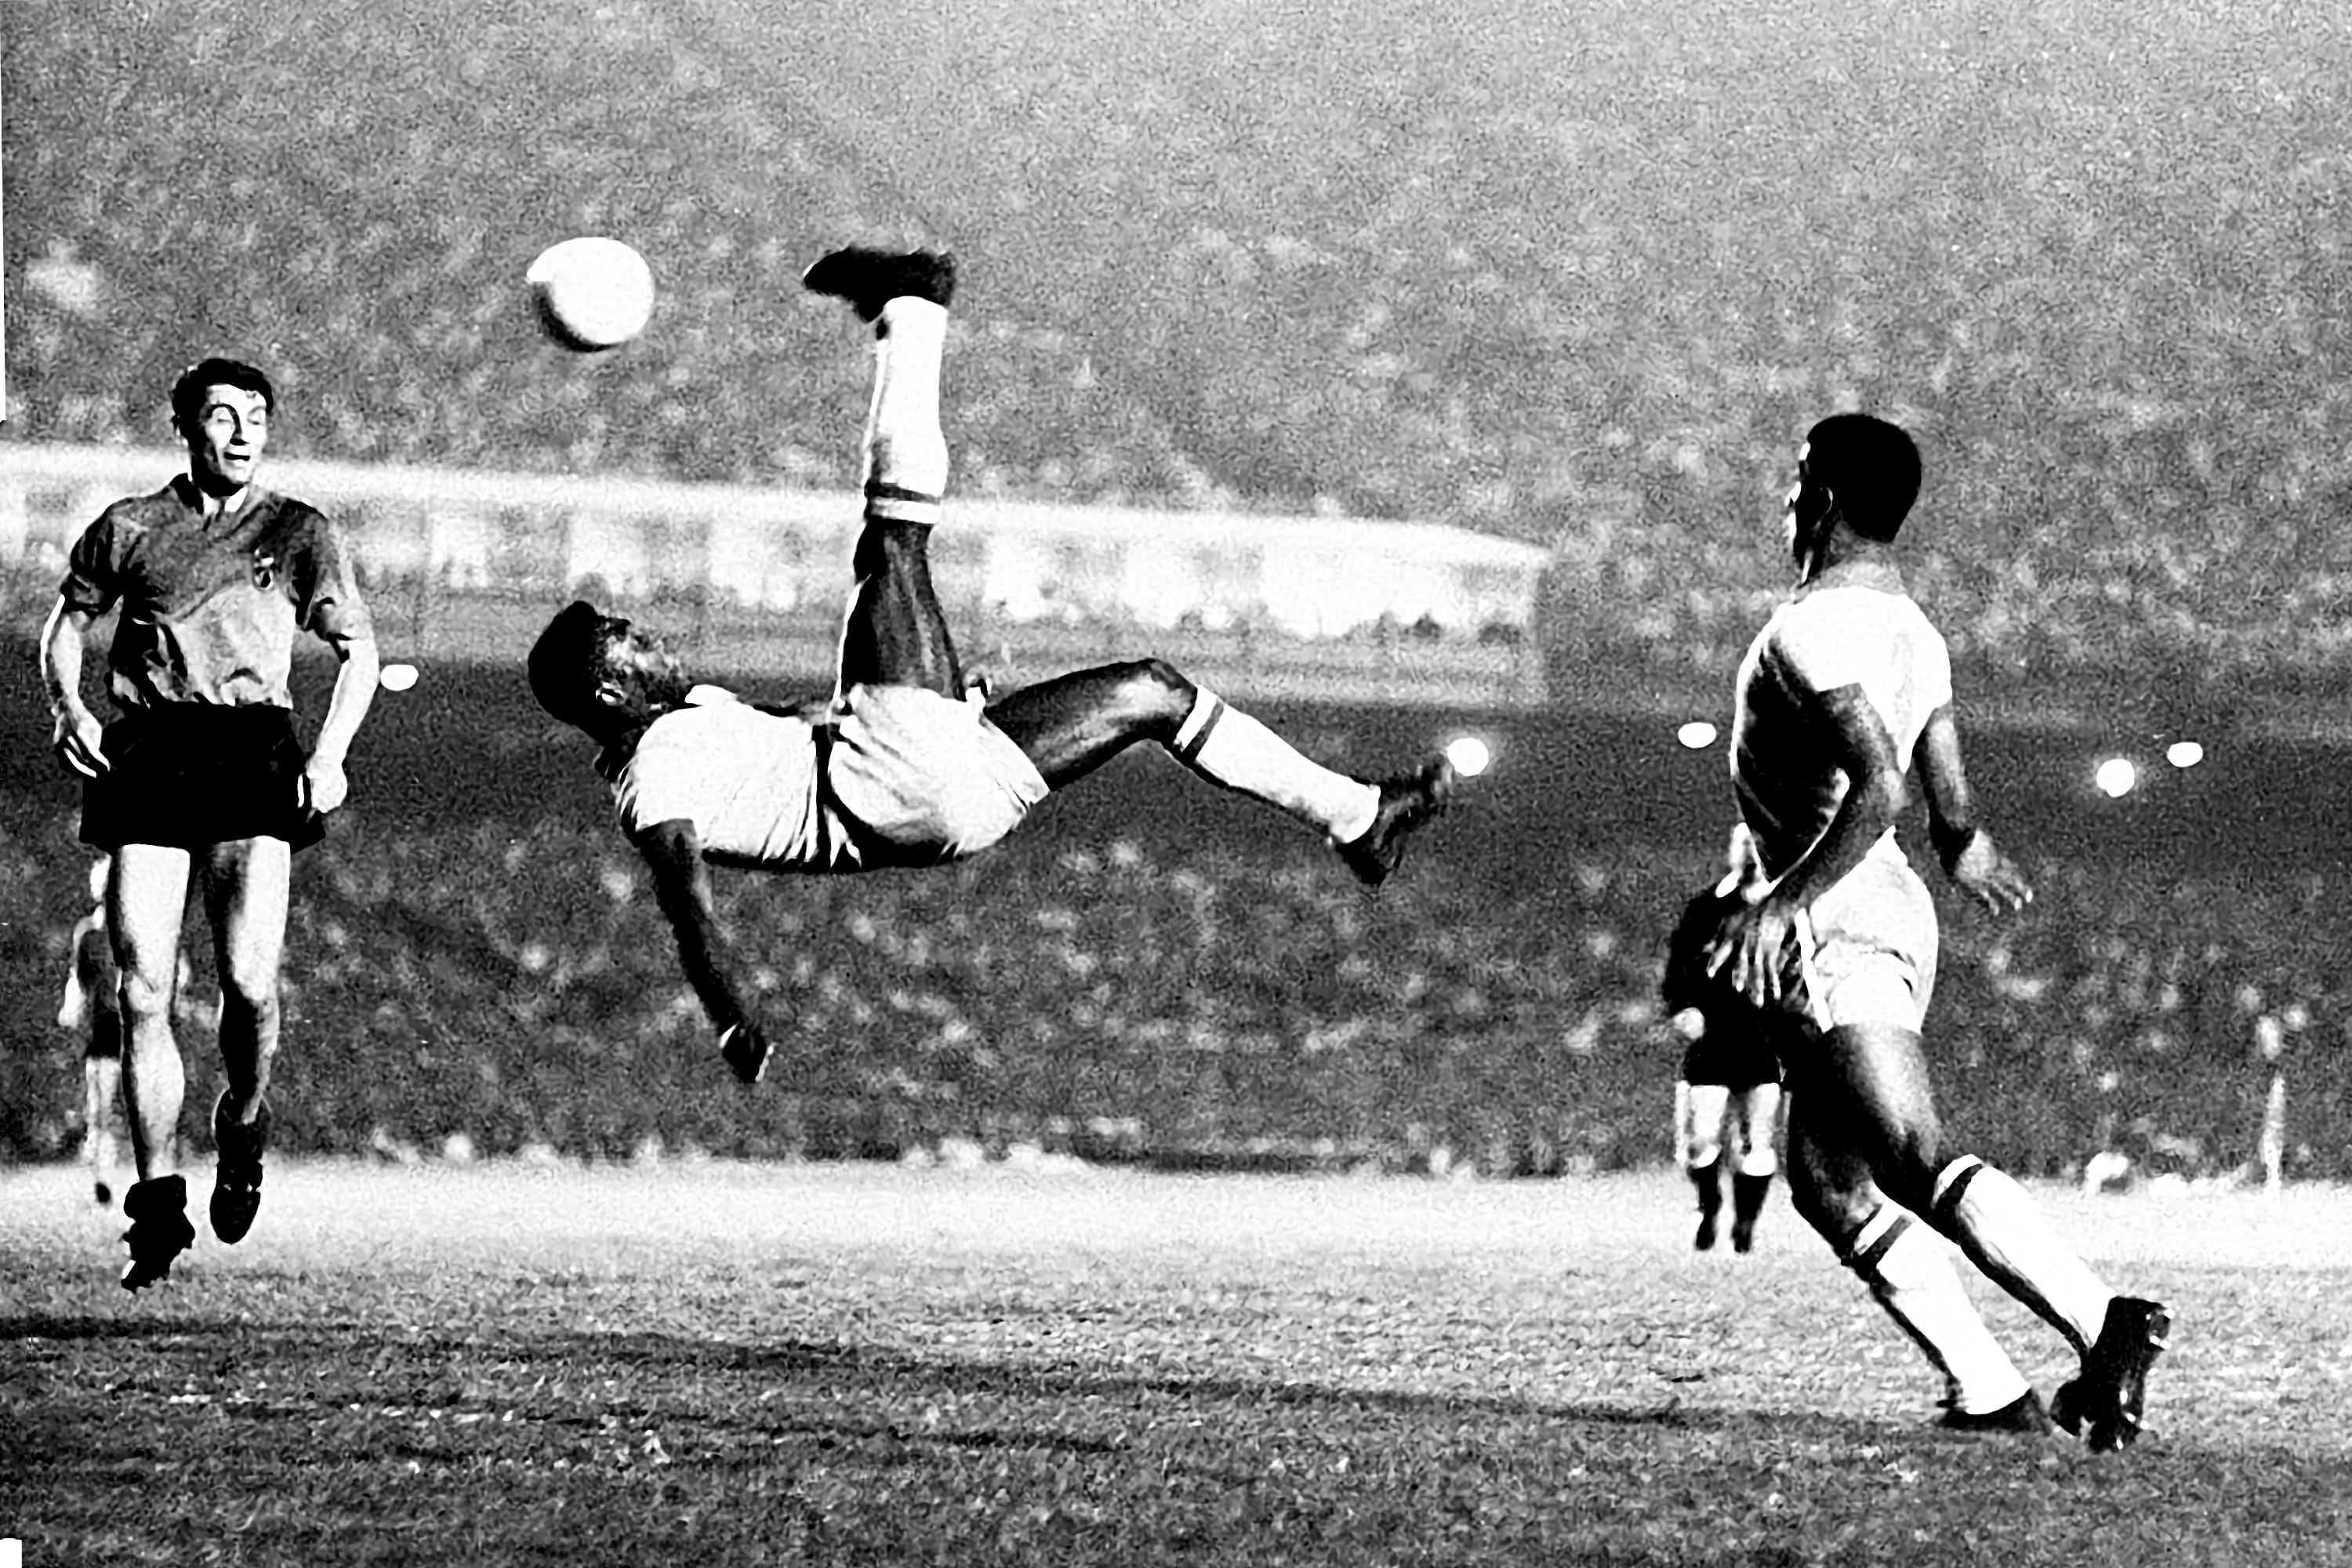 News Central - Hublot creates football history again - Pelé and Maradona  for once in a lifetime match